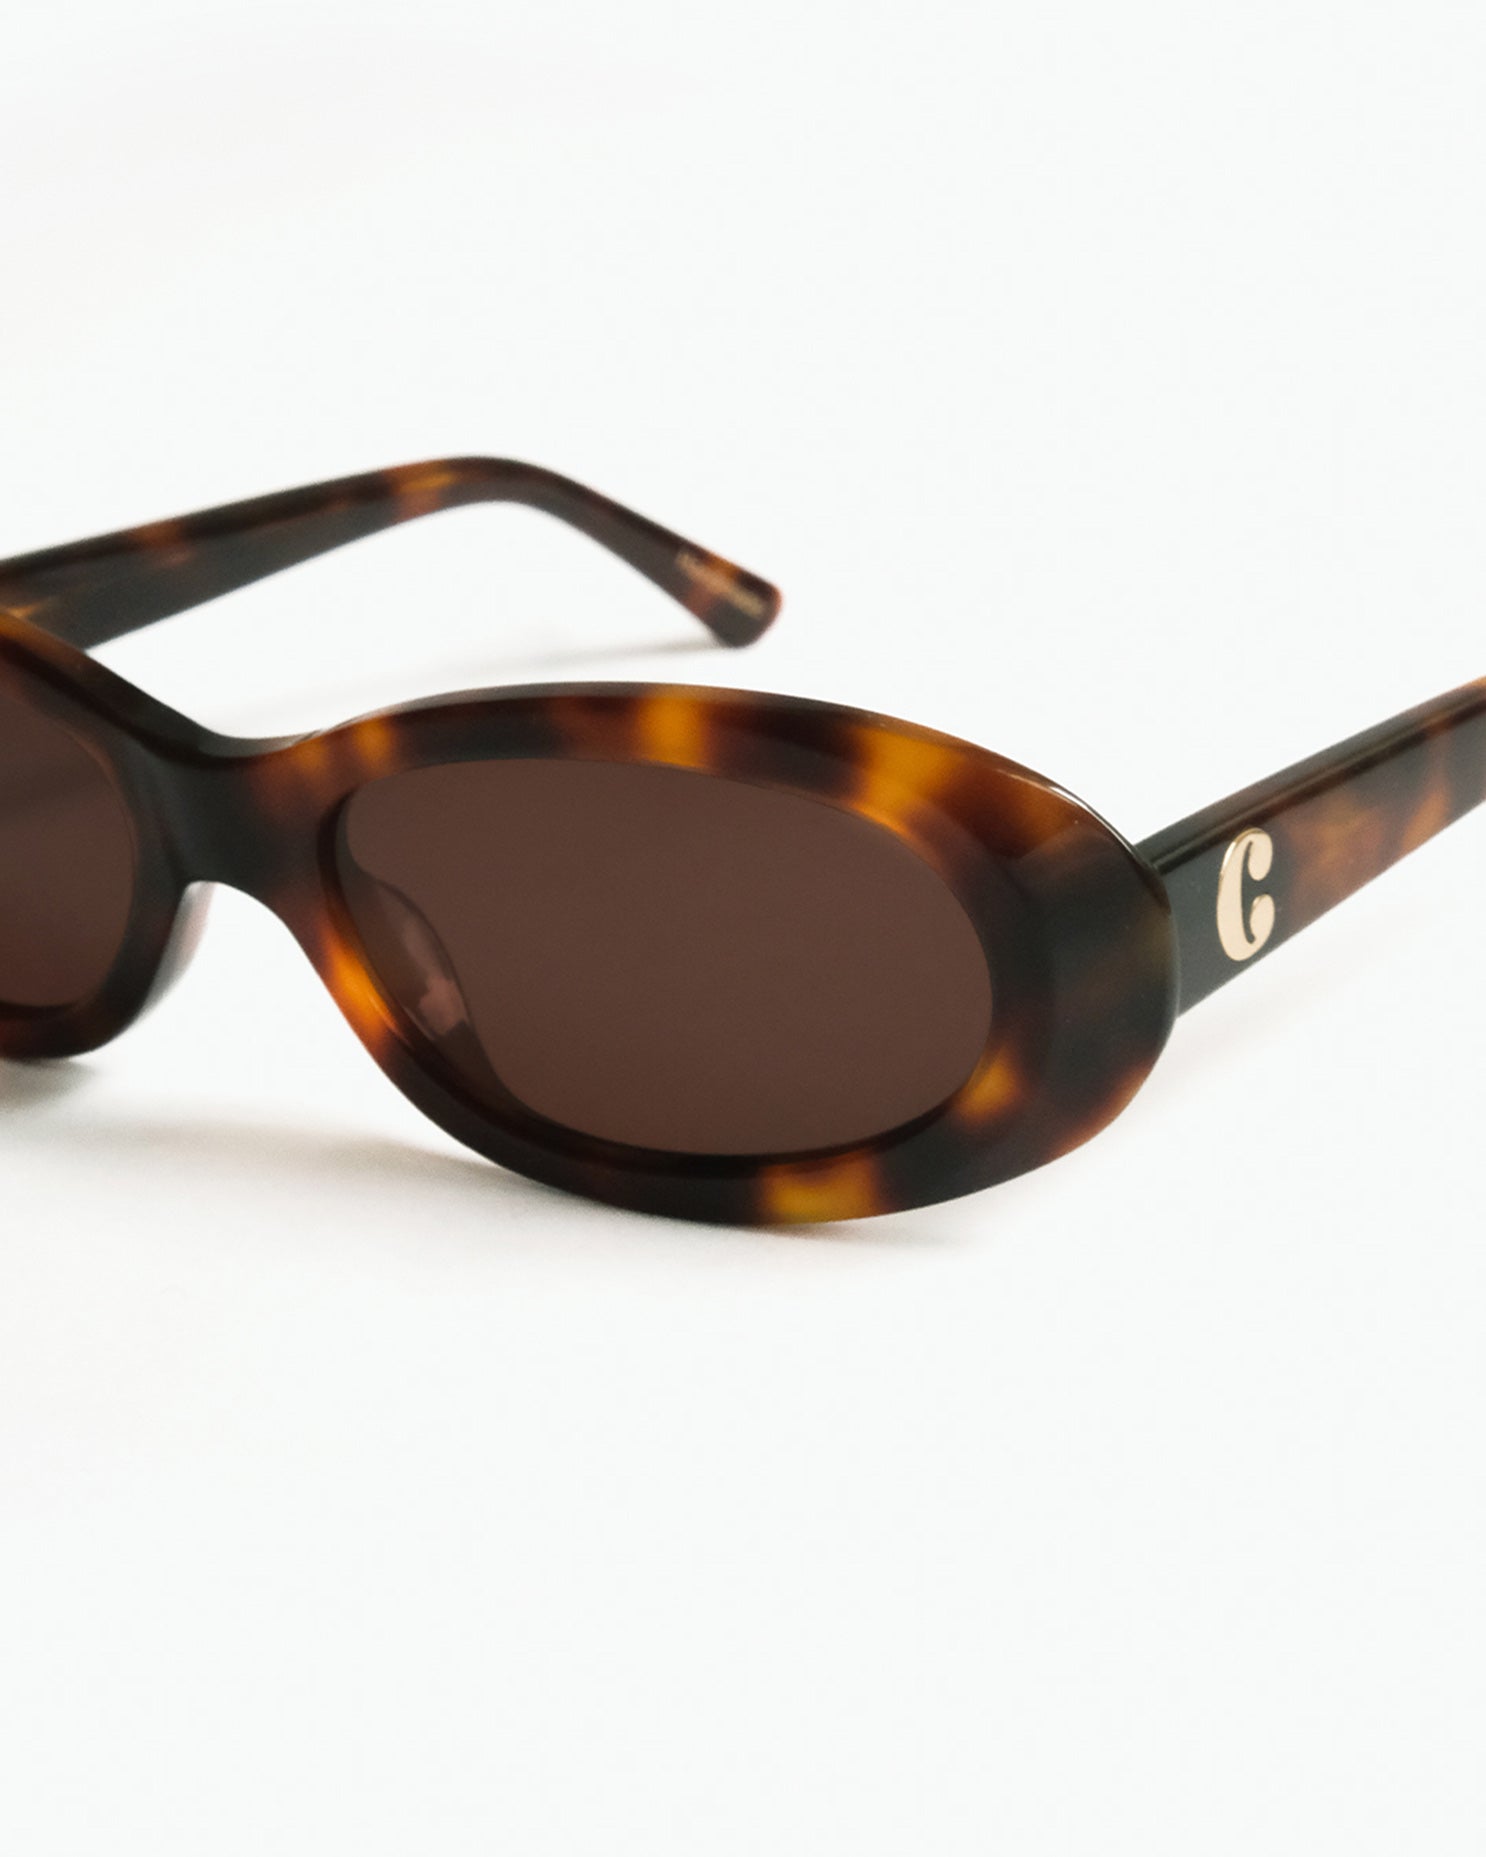 Louis Sunglasses in Tortoise Brown